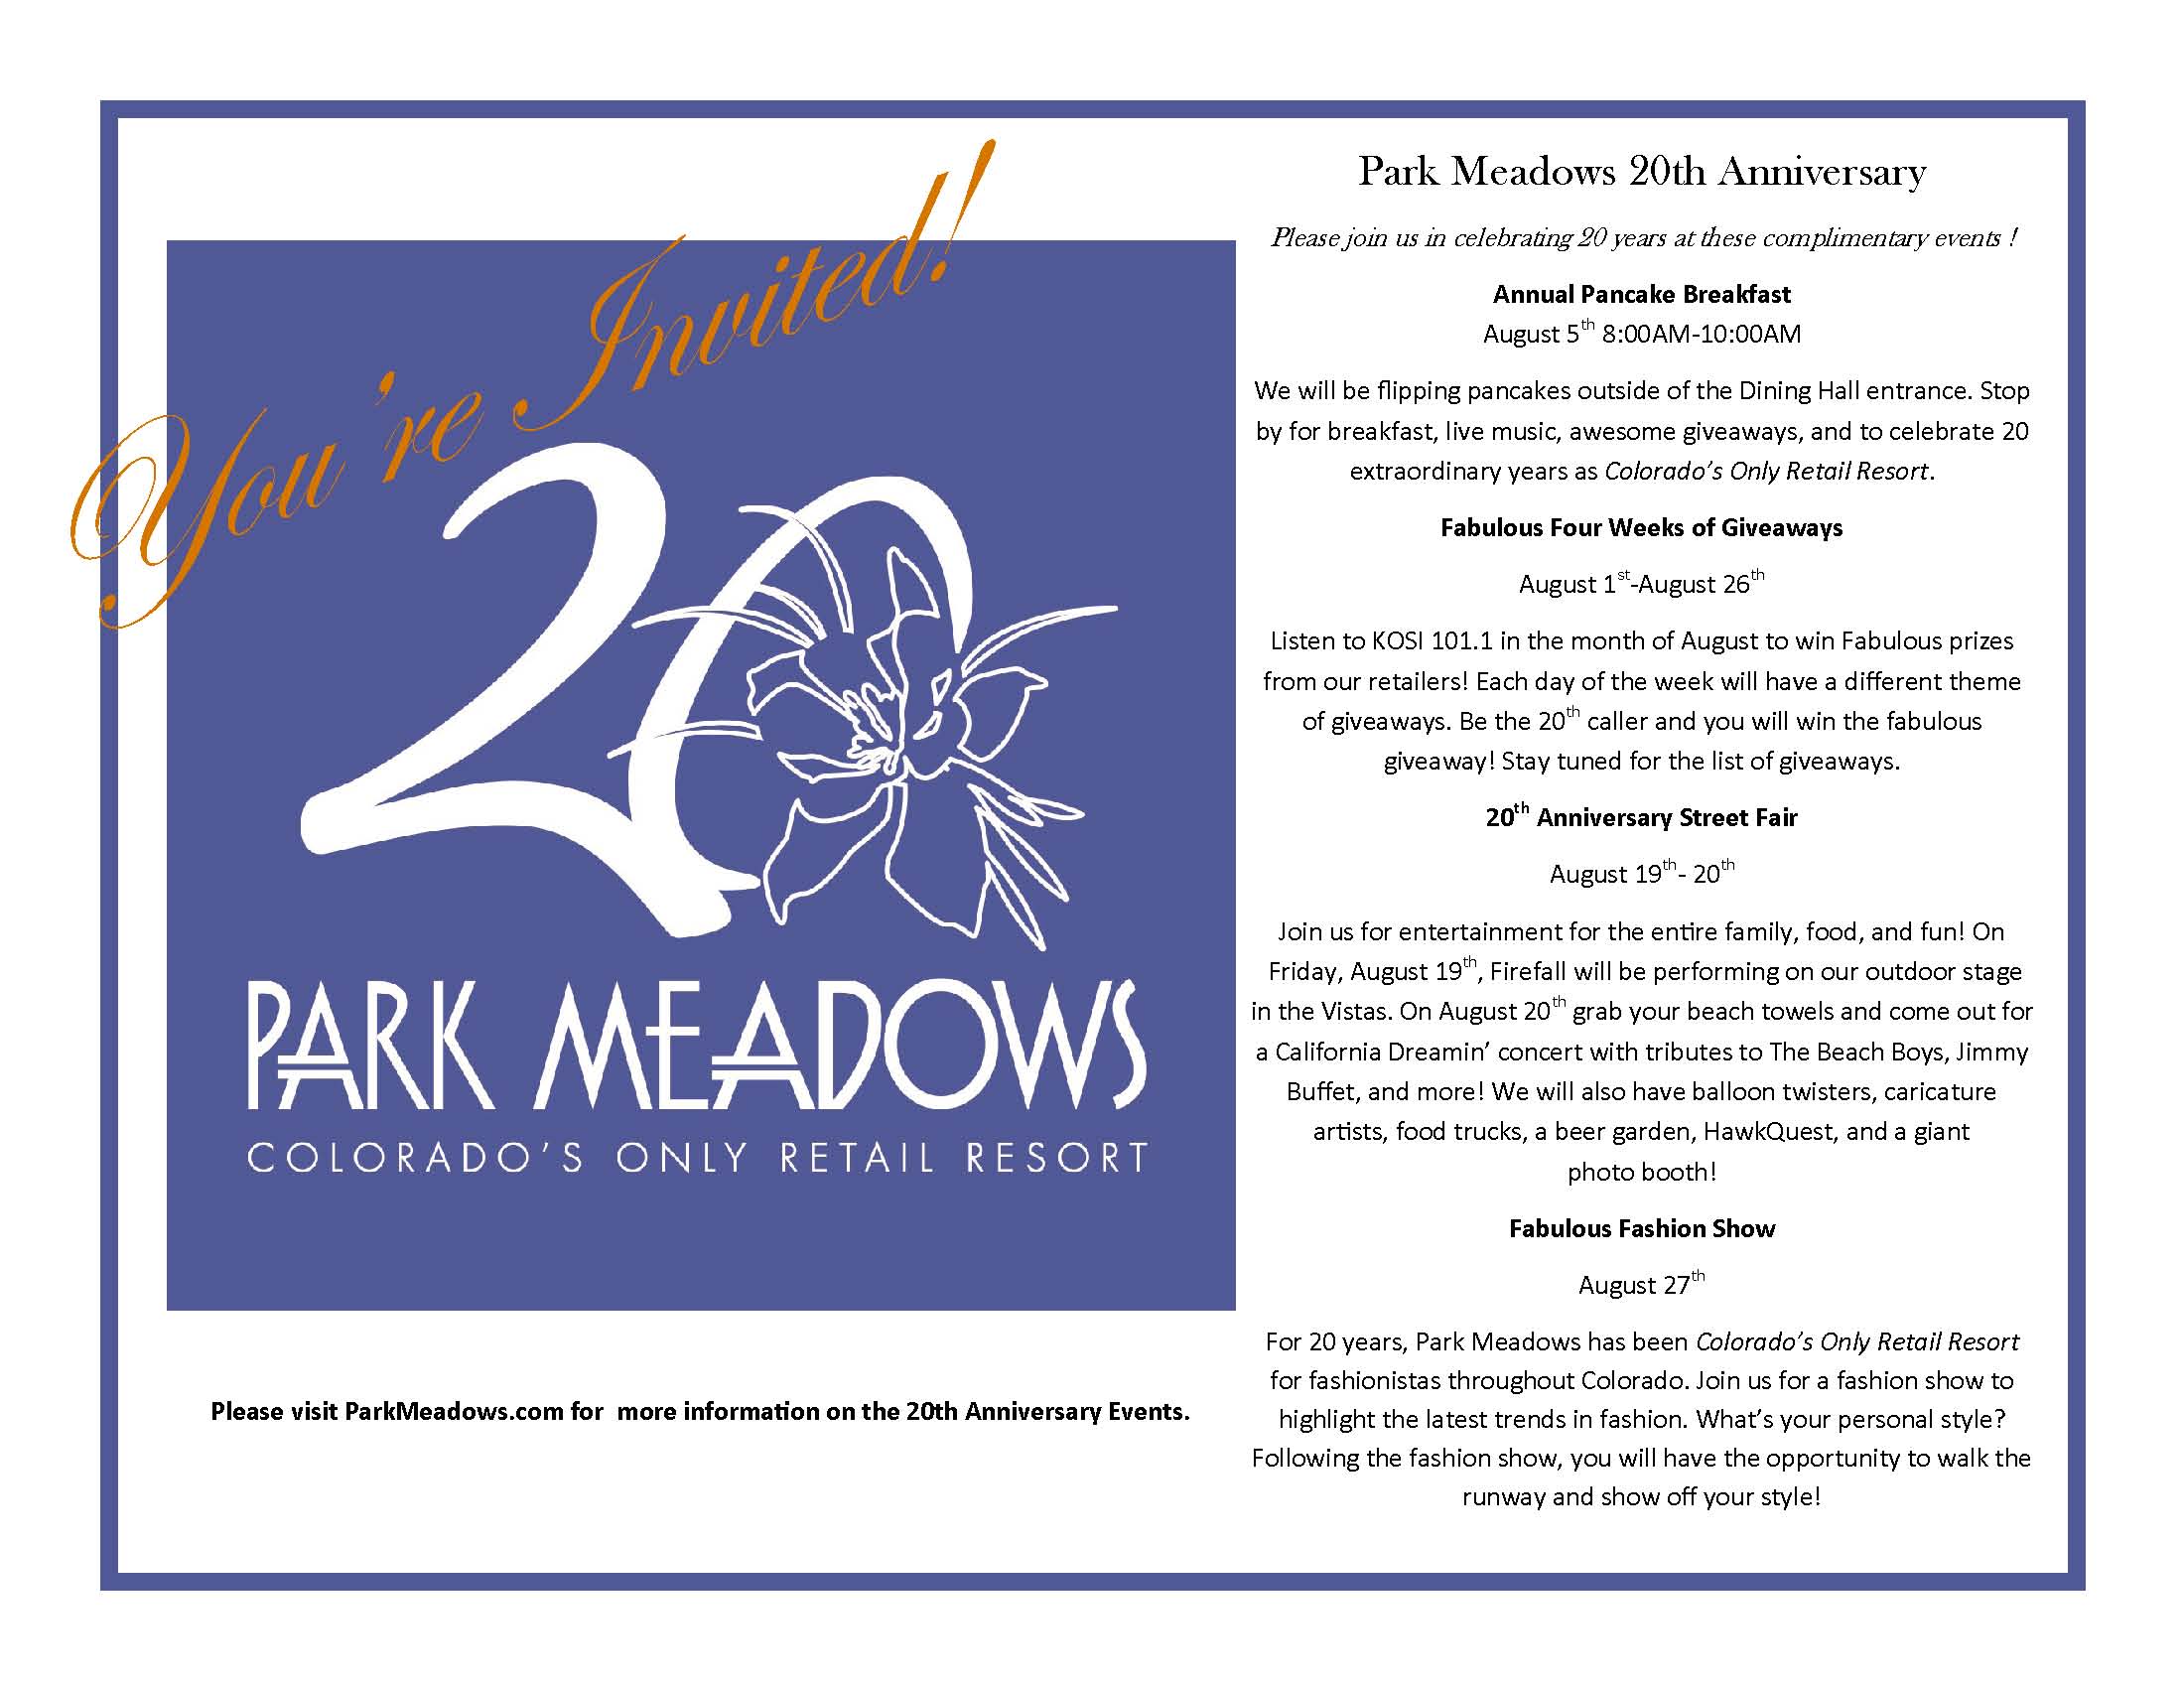 Park Meadows Anniversary Breakfast